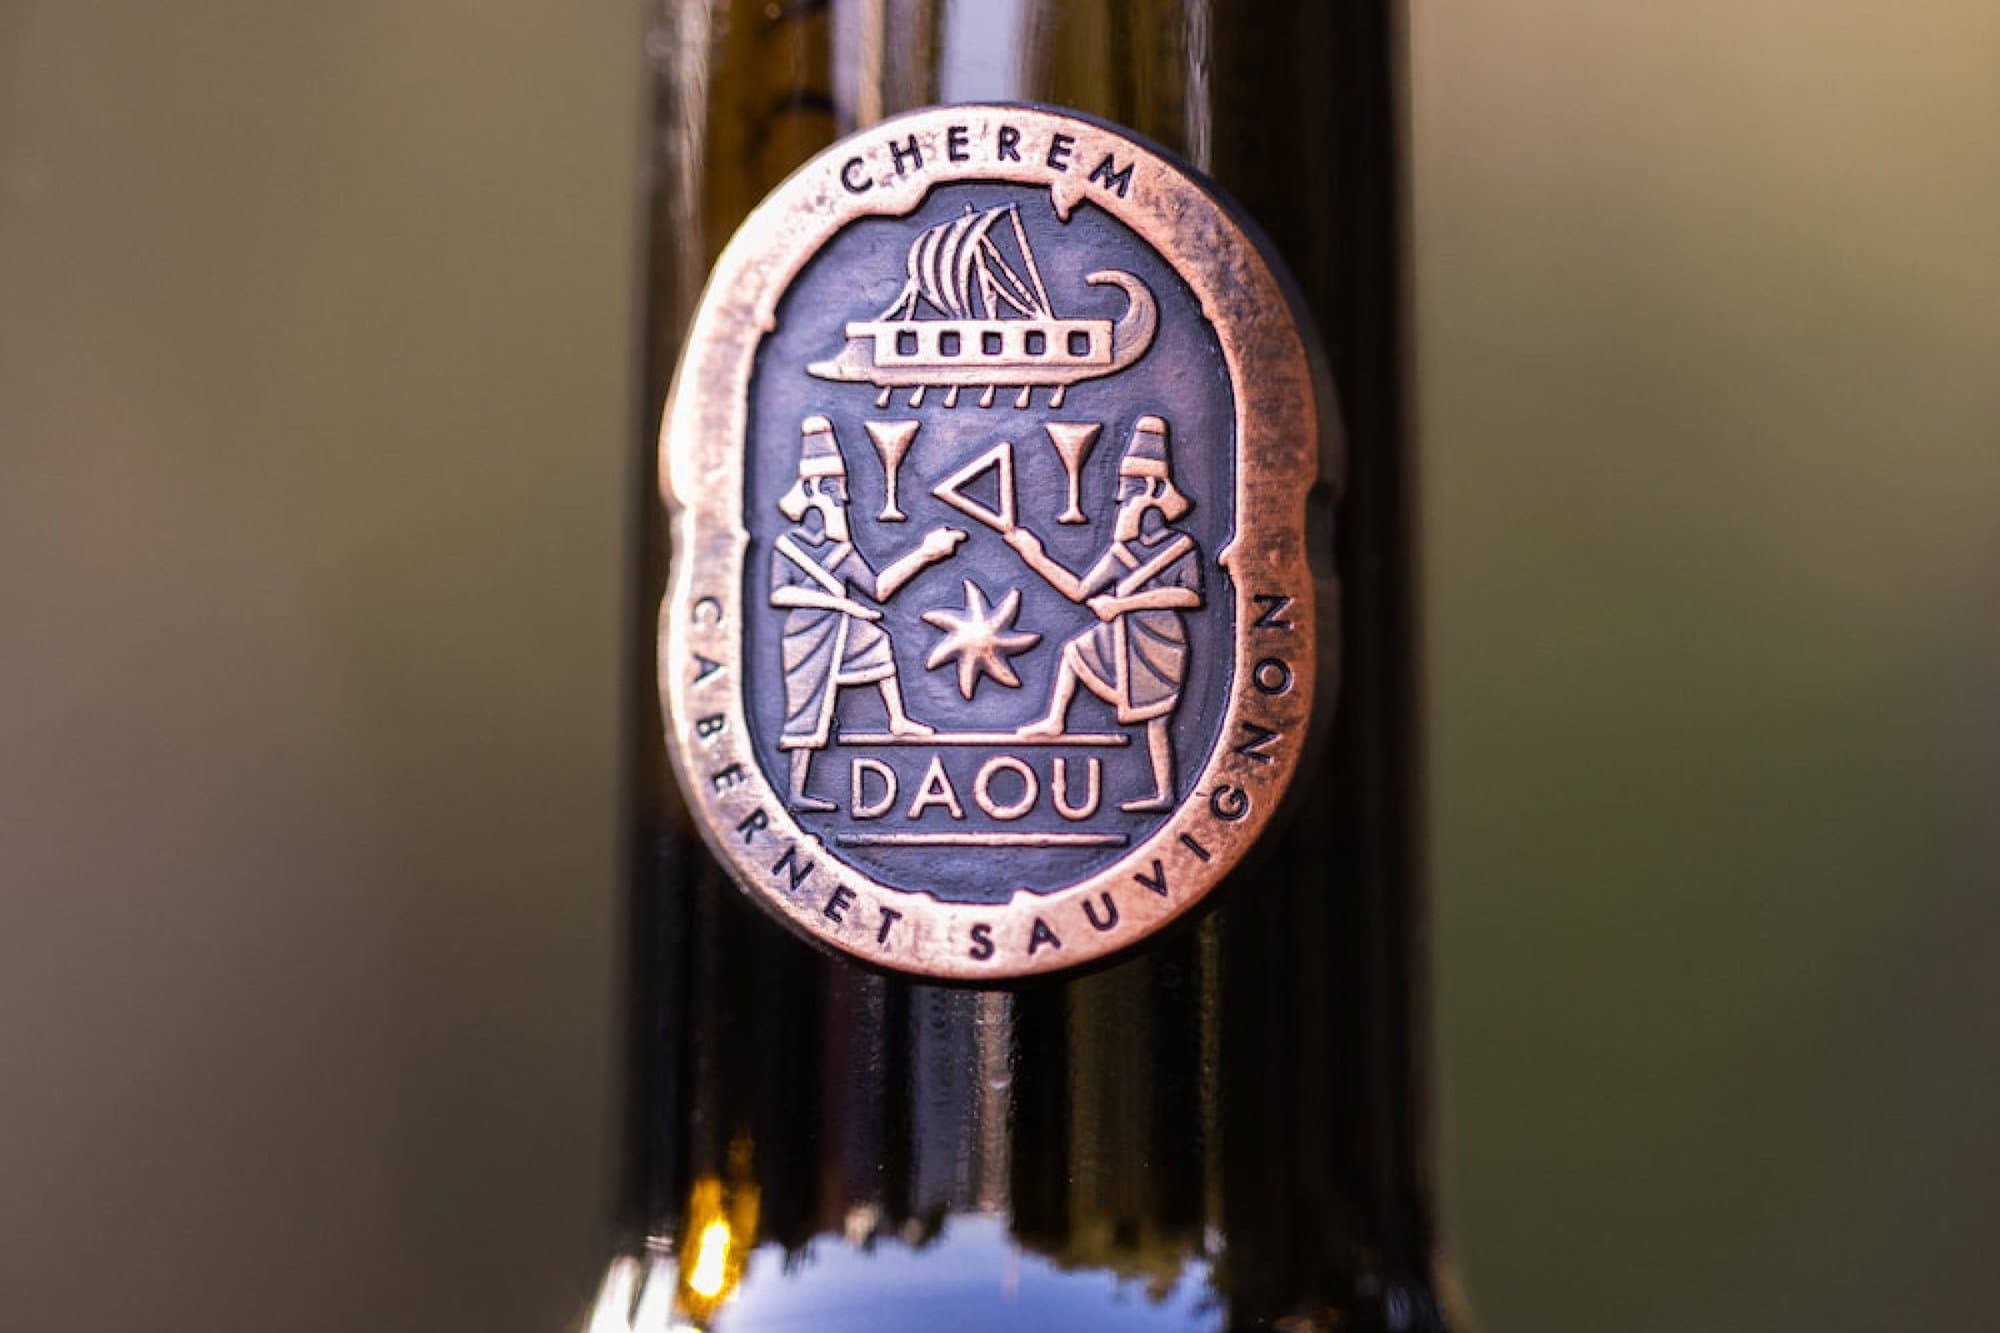 Close up of the label on a bottle of Cherem Cabernet Sauvignon